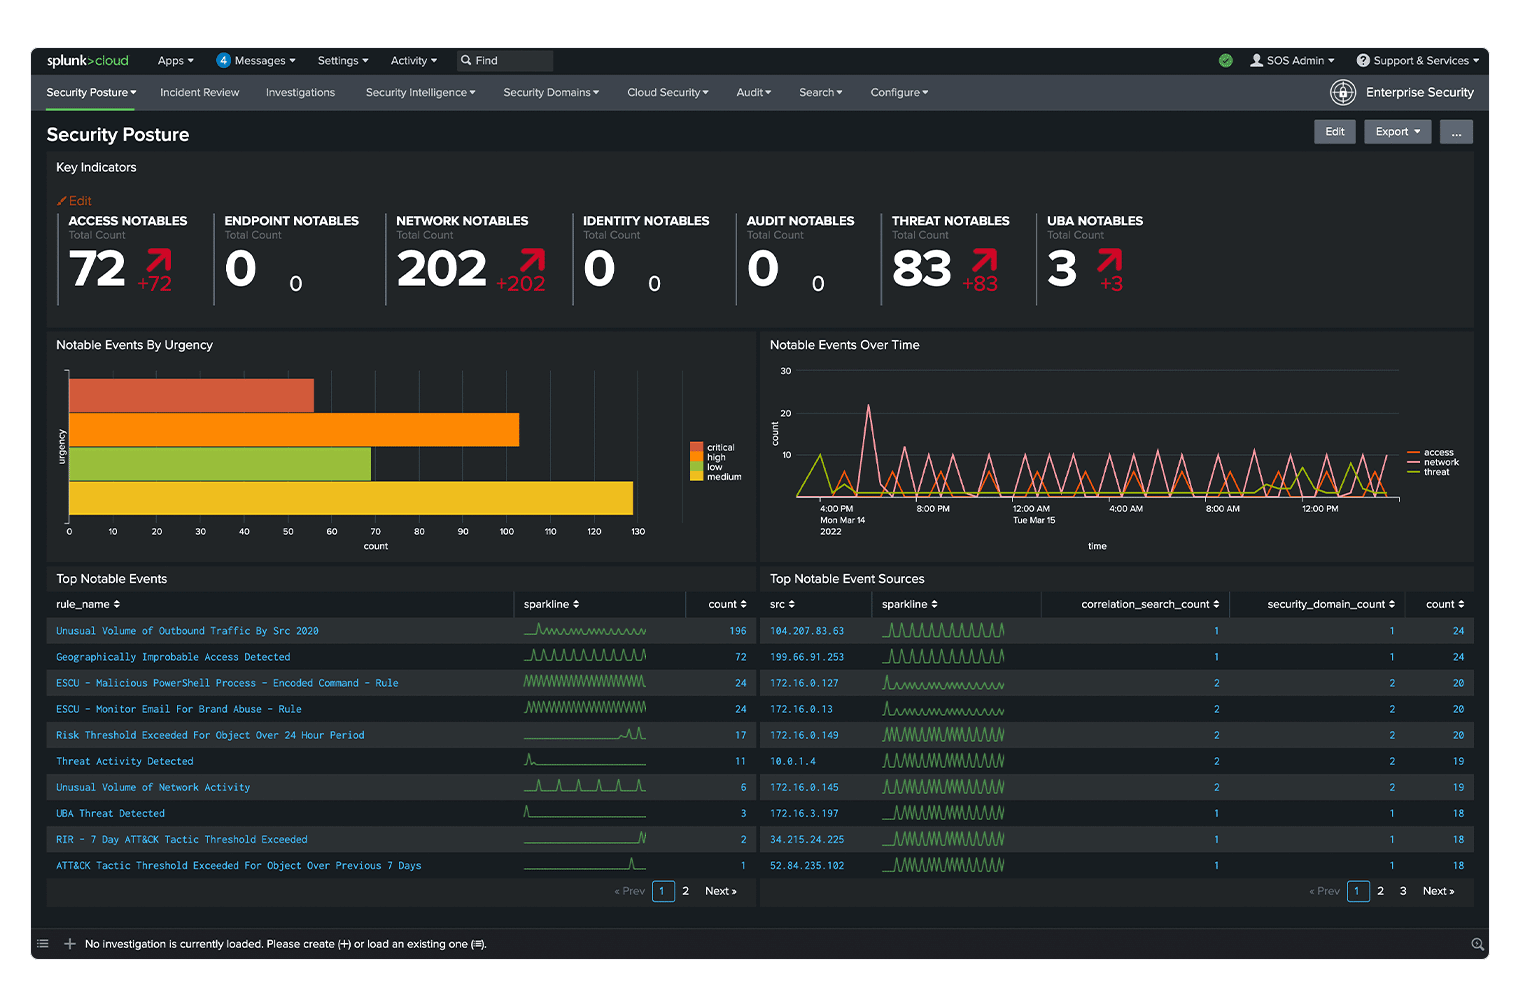 splunk enterprise security 7.0